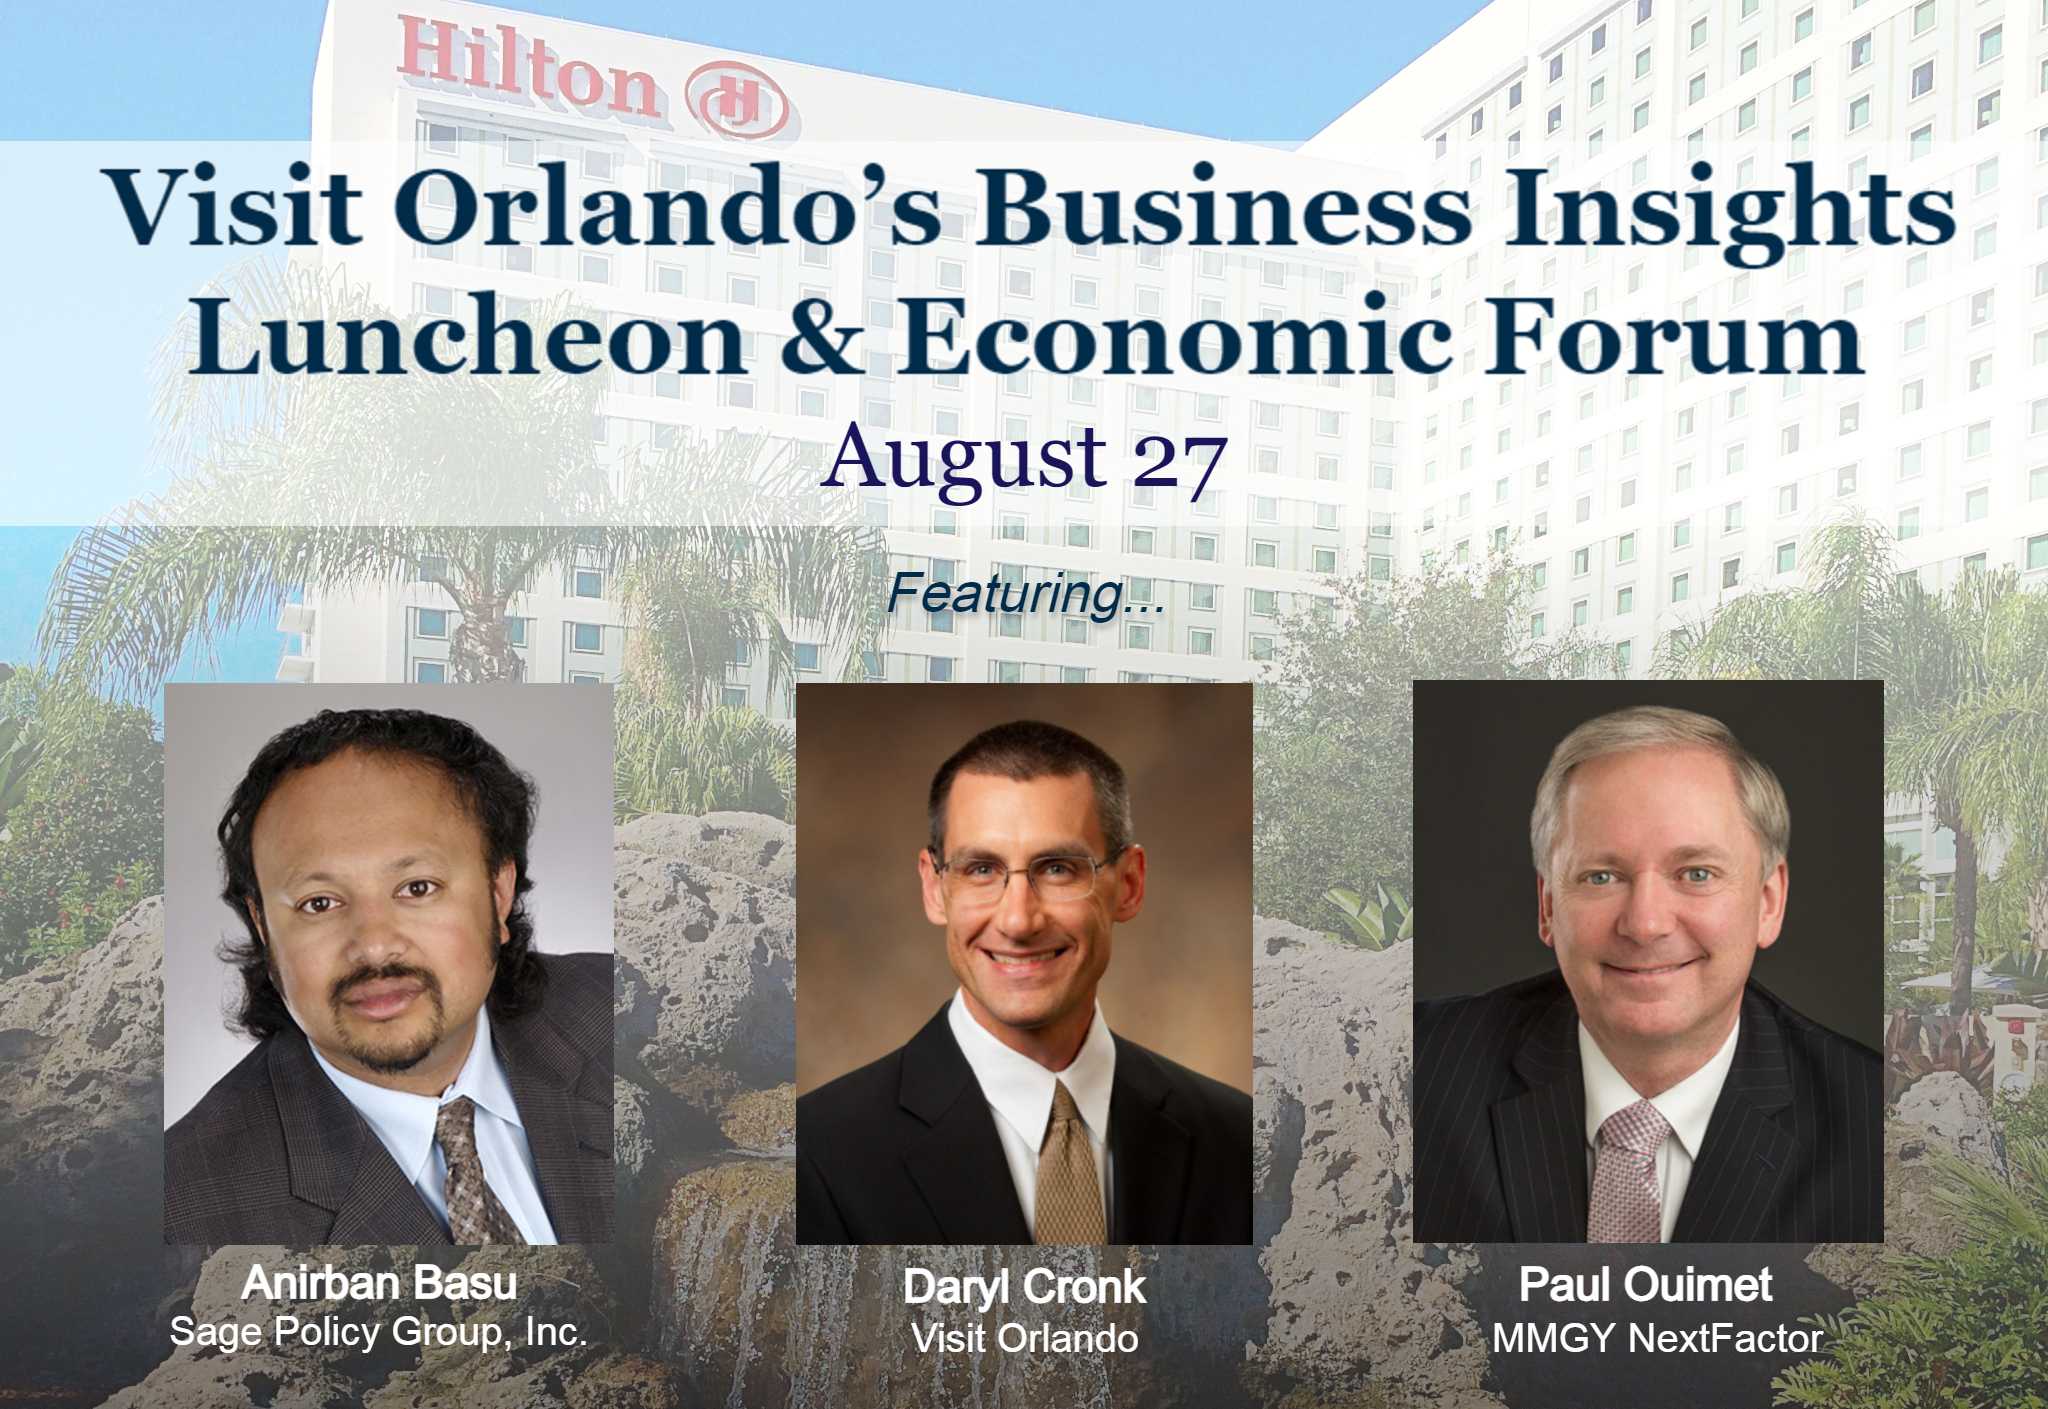 Visit Orlando's Business Insights Luncheon & Economic Forum is returning Aug. 27